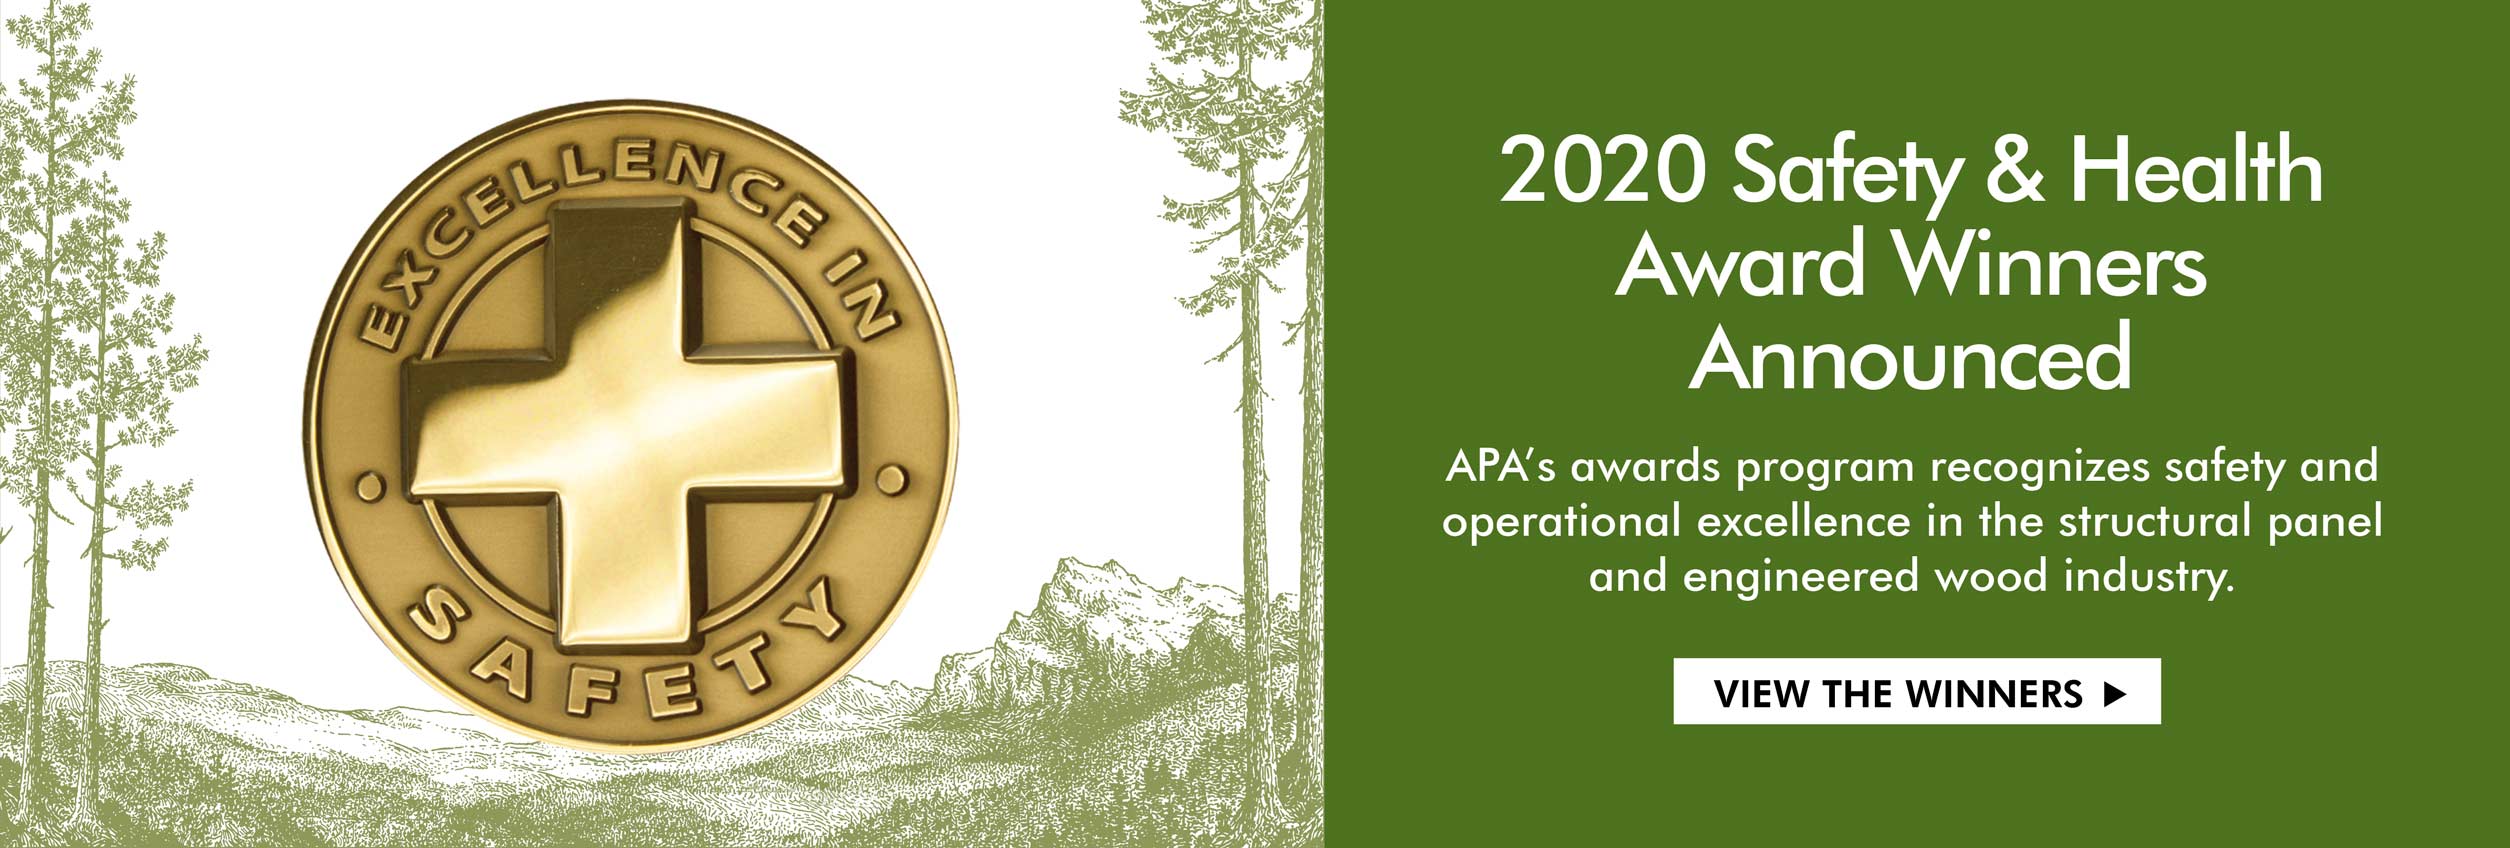 APA 2020 Safety & Health Awards